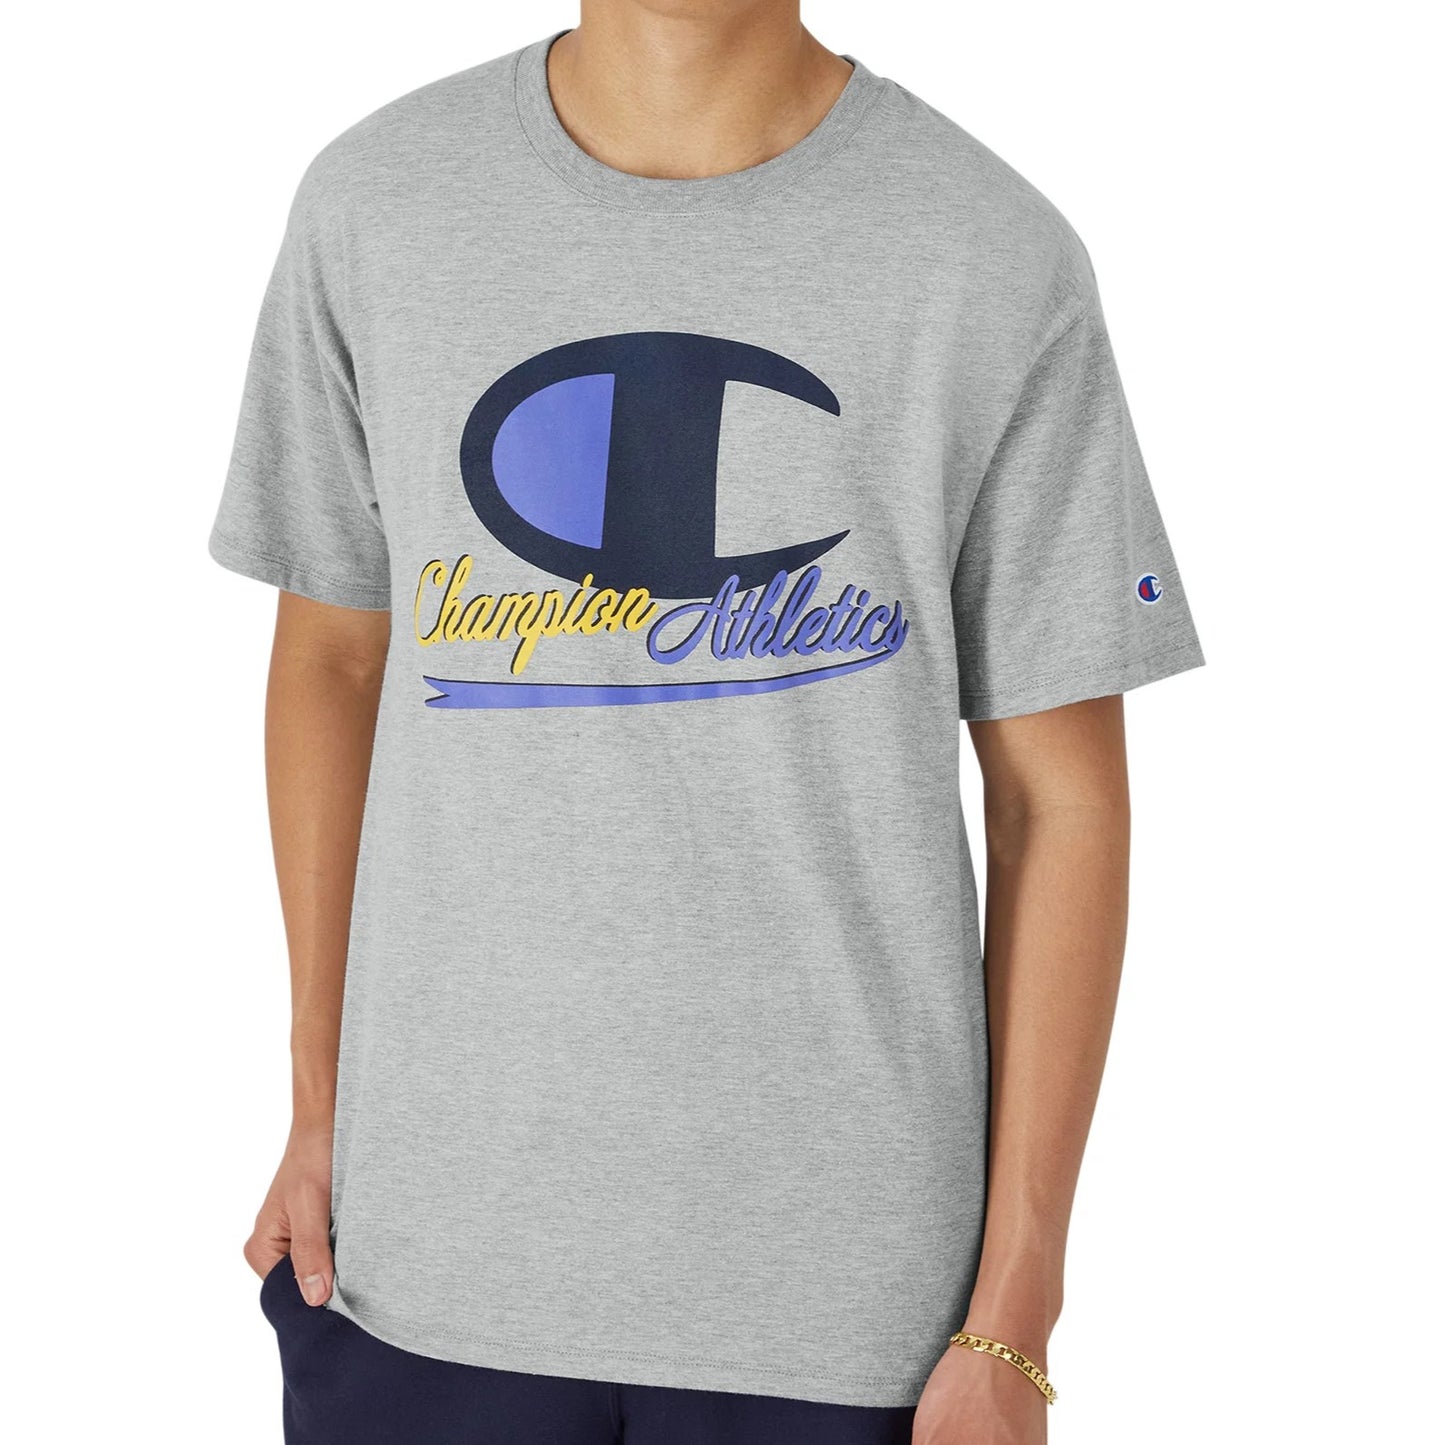 Champion Classic Athletics Logo Graphic T-Shirt - Heather Grey